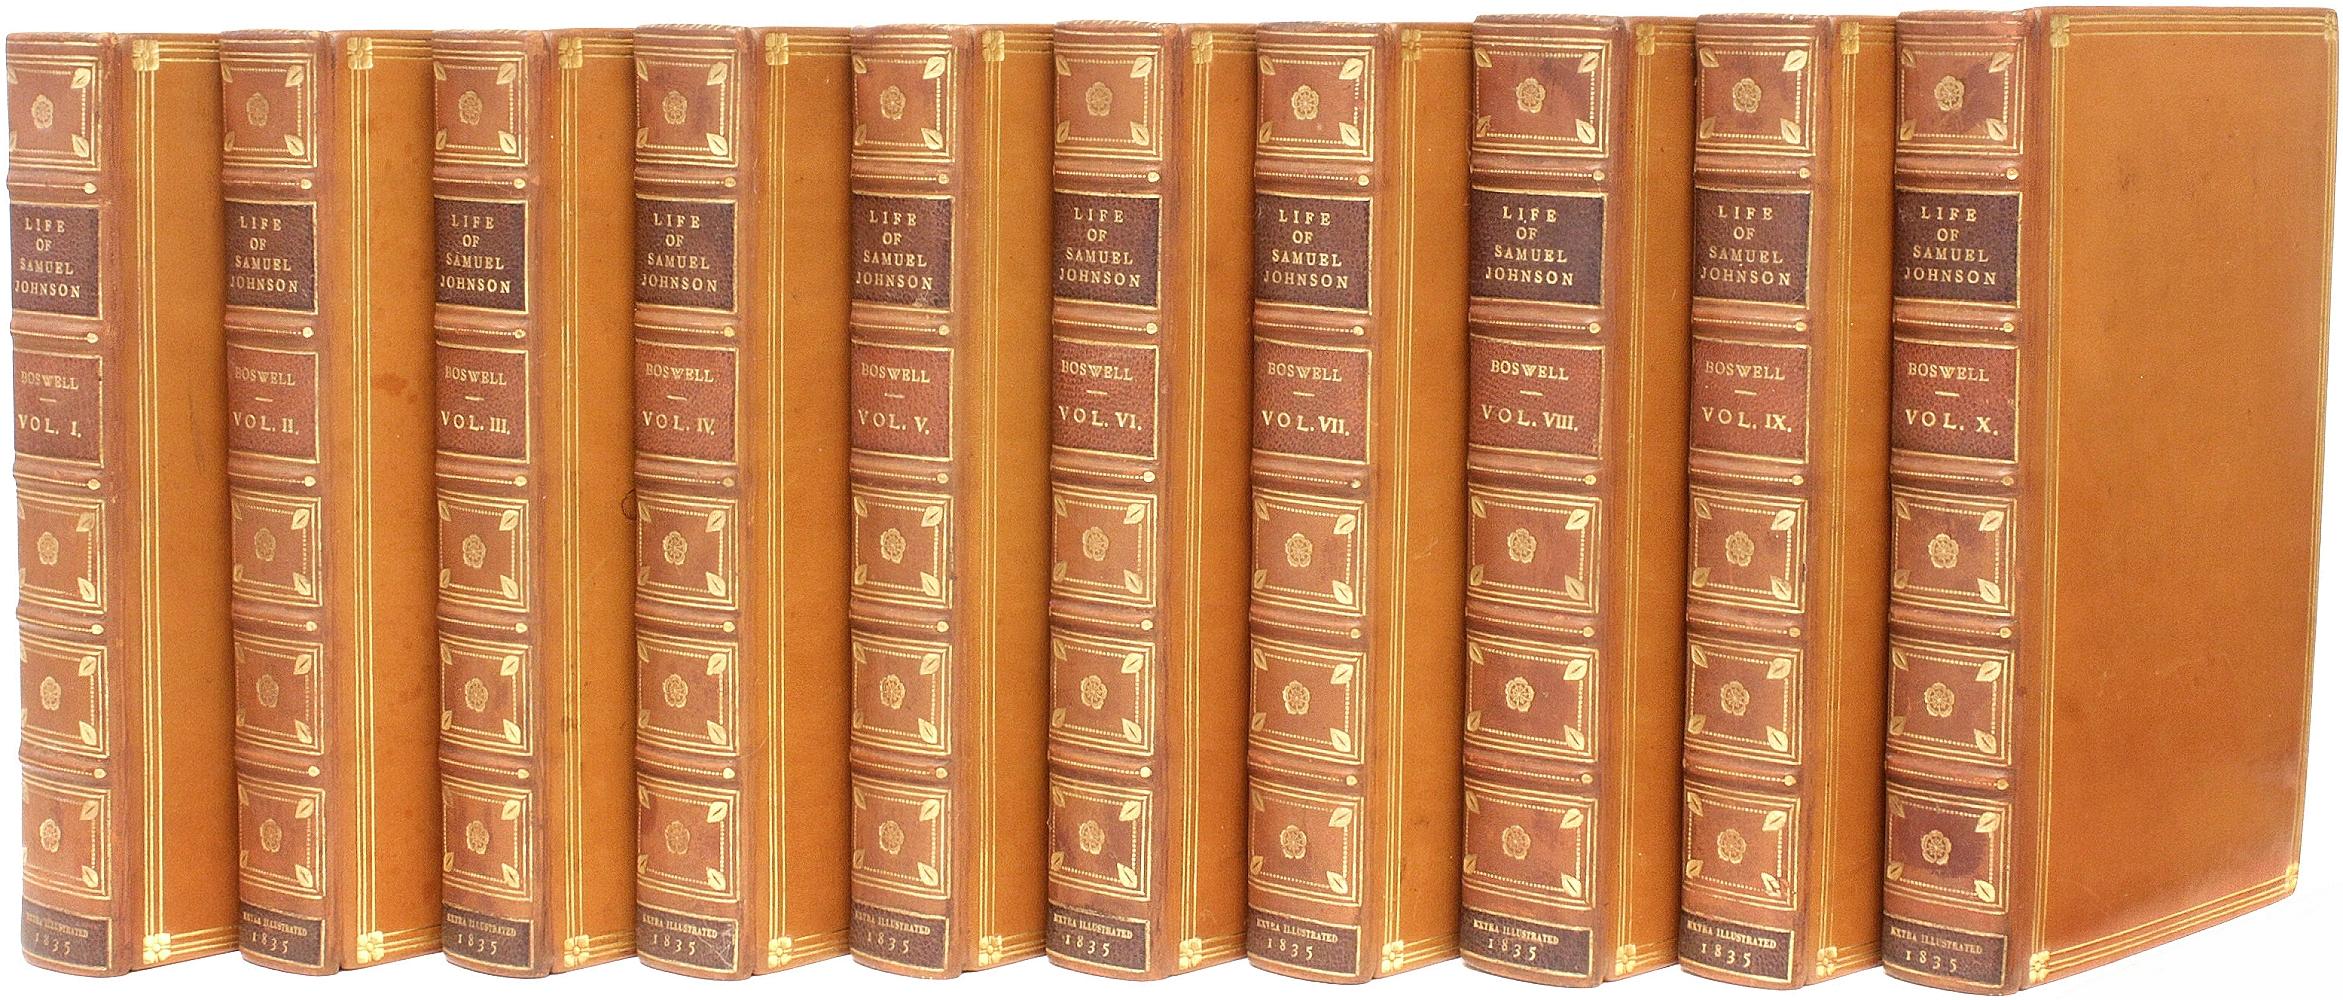 AUTHOR: BOSWELL, James. 

TITLE: The Life Of Samuel Johnson.

PUBLISHER: London: John Murray, 1835.

DESCRIPTION: EXTRA ILLUSTRATED. 10 vols., 6-11/16